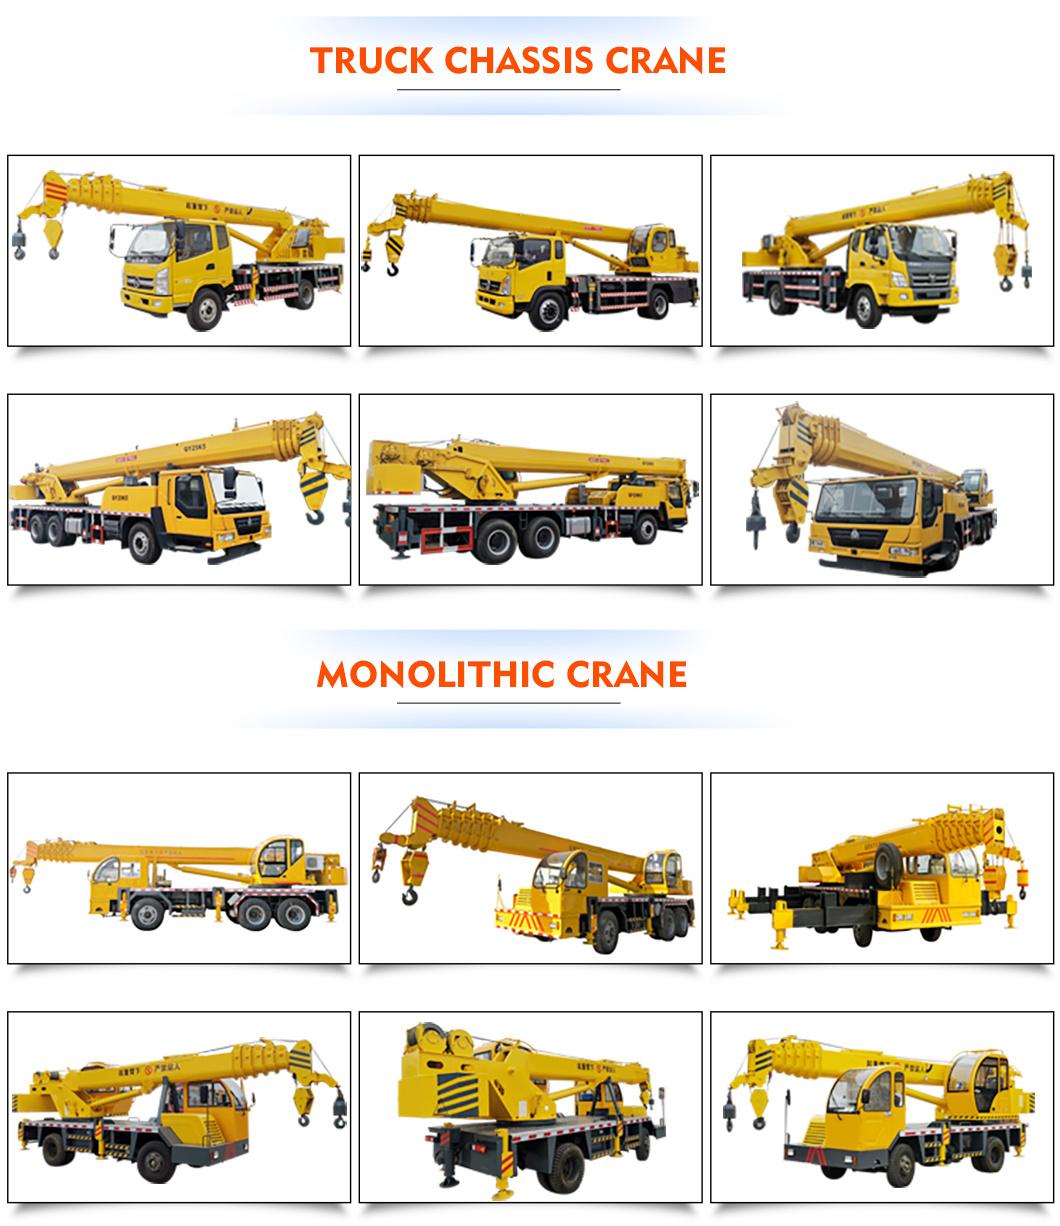 Mature and Reliable Lifting Equipment Mini Cranes Telescopic Price of Mobile Crane in India